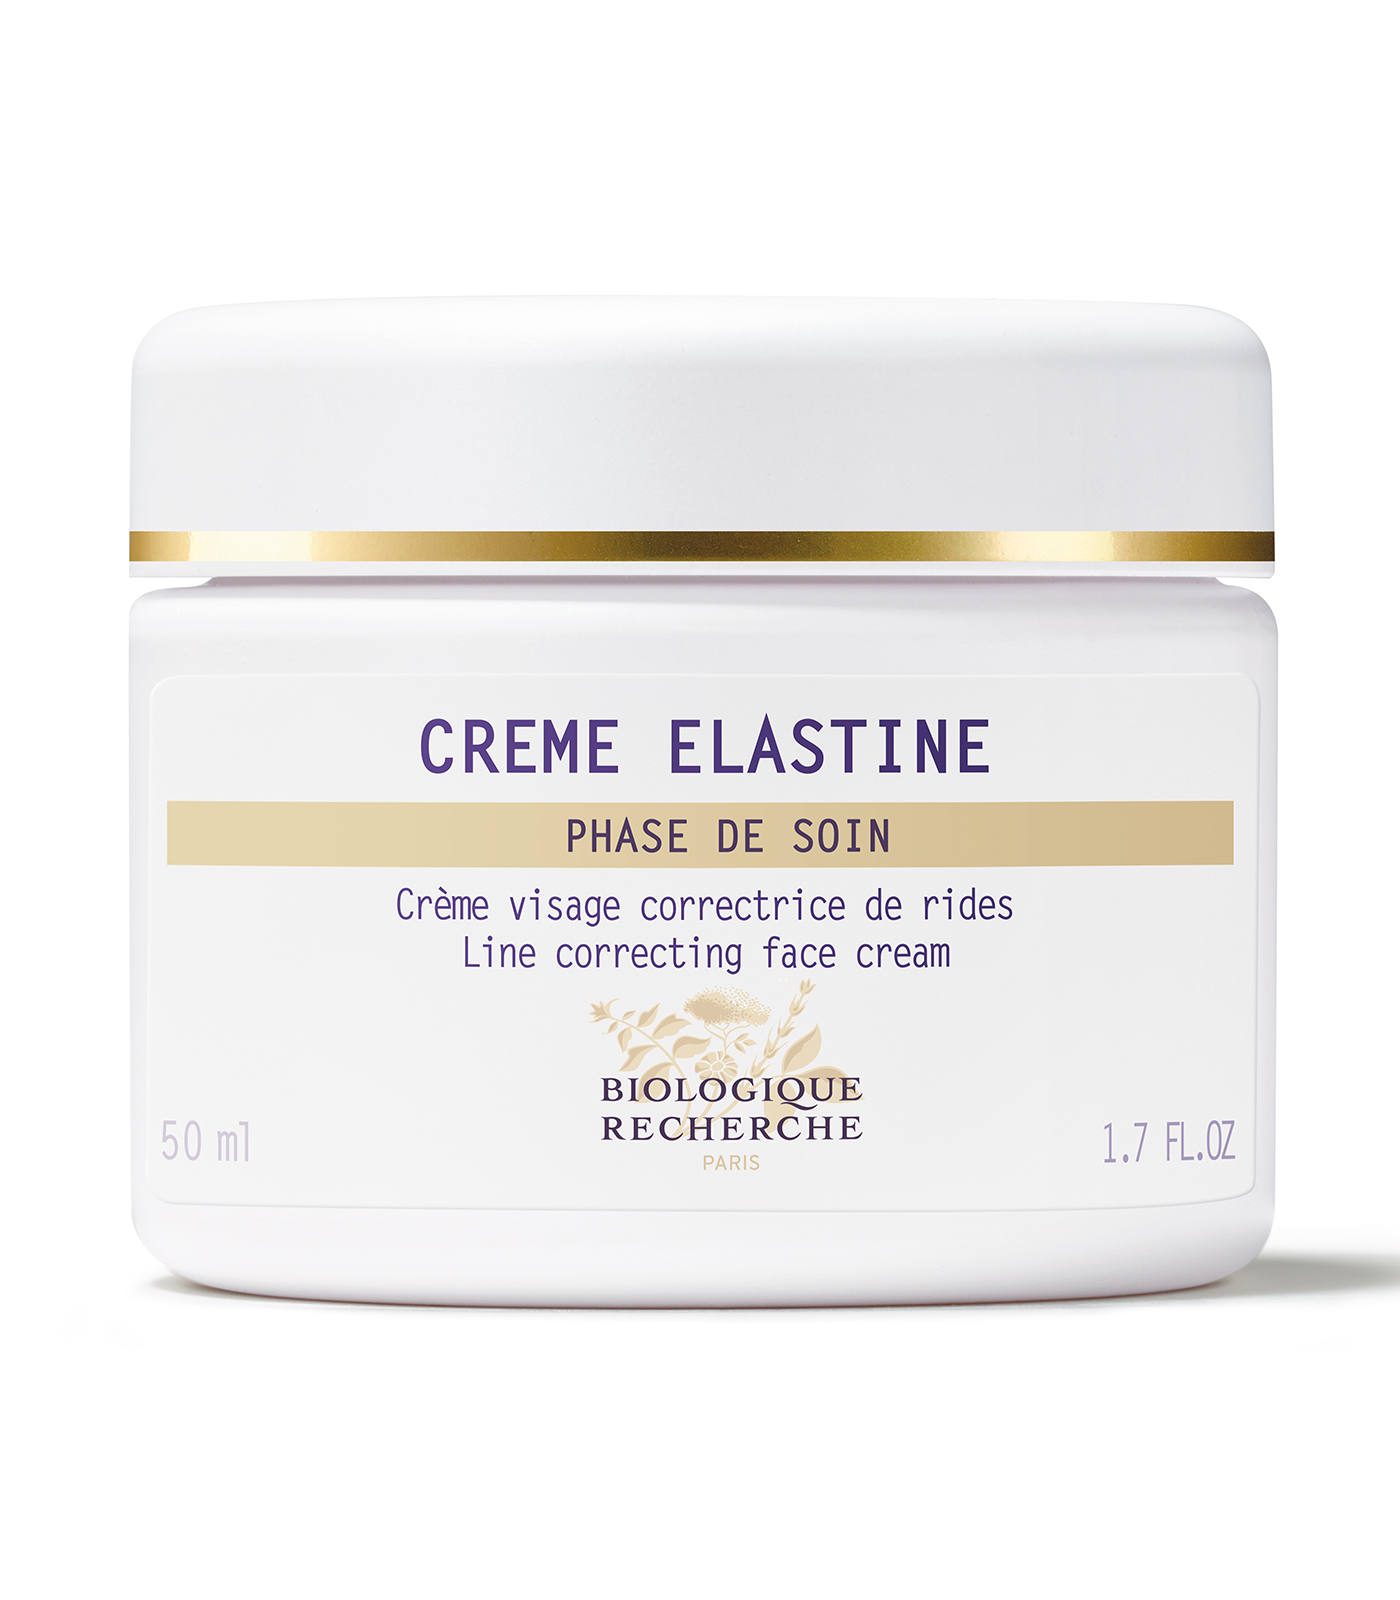 Crème Elastine